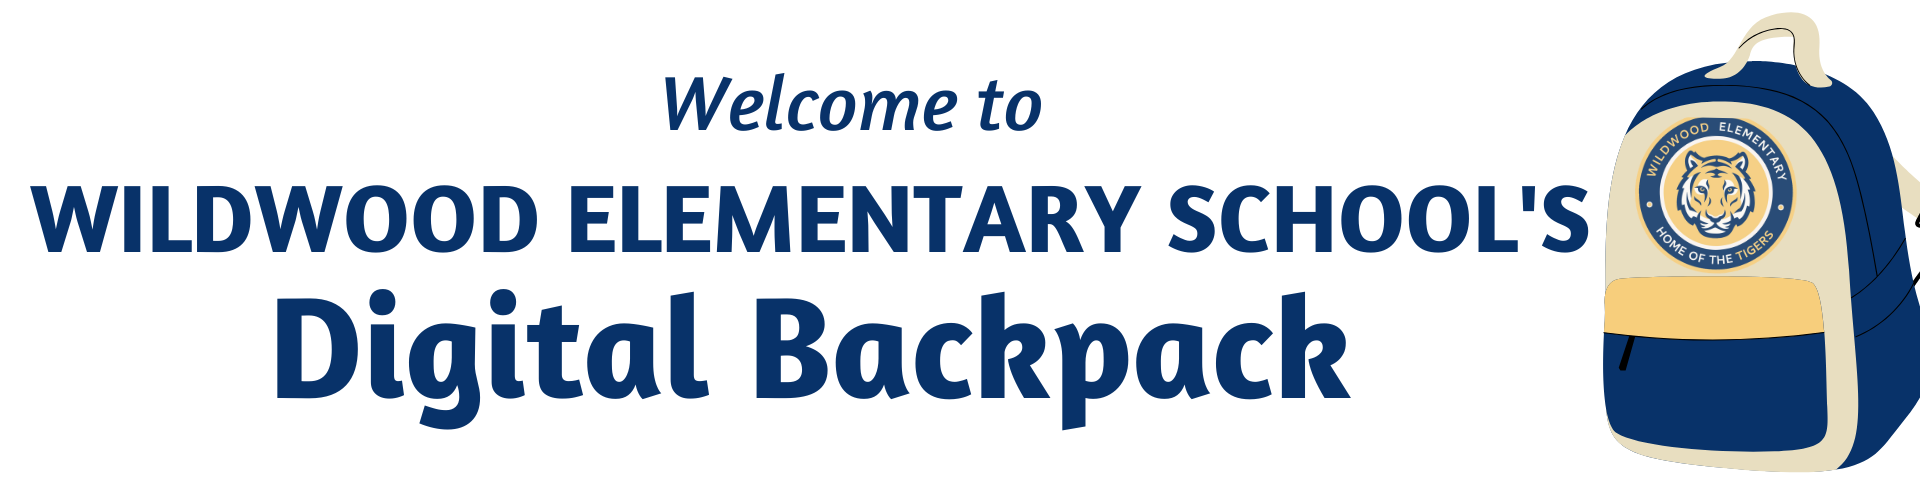 Welcome to Wildwood Elementary School's Digital Backpack